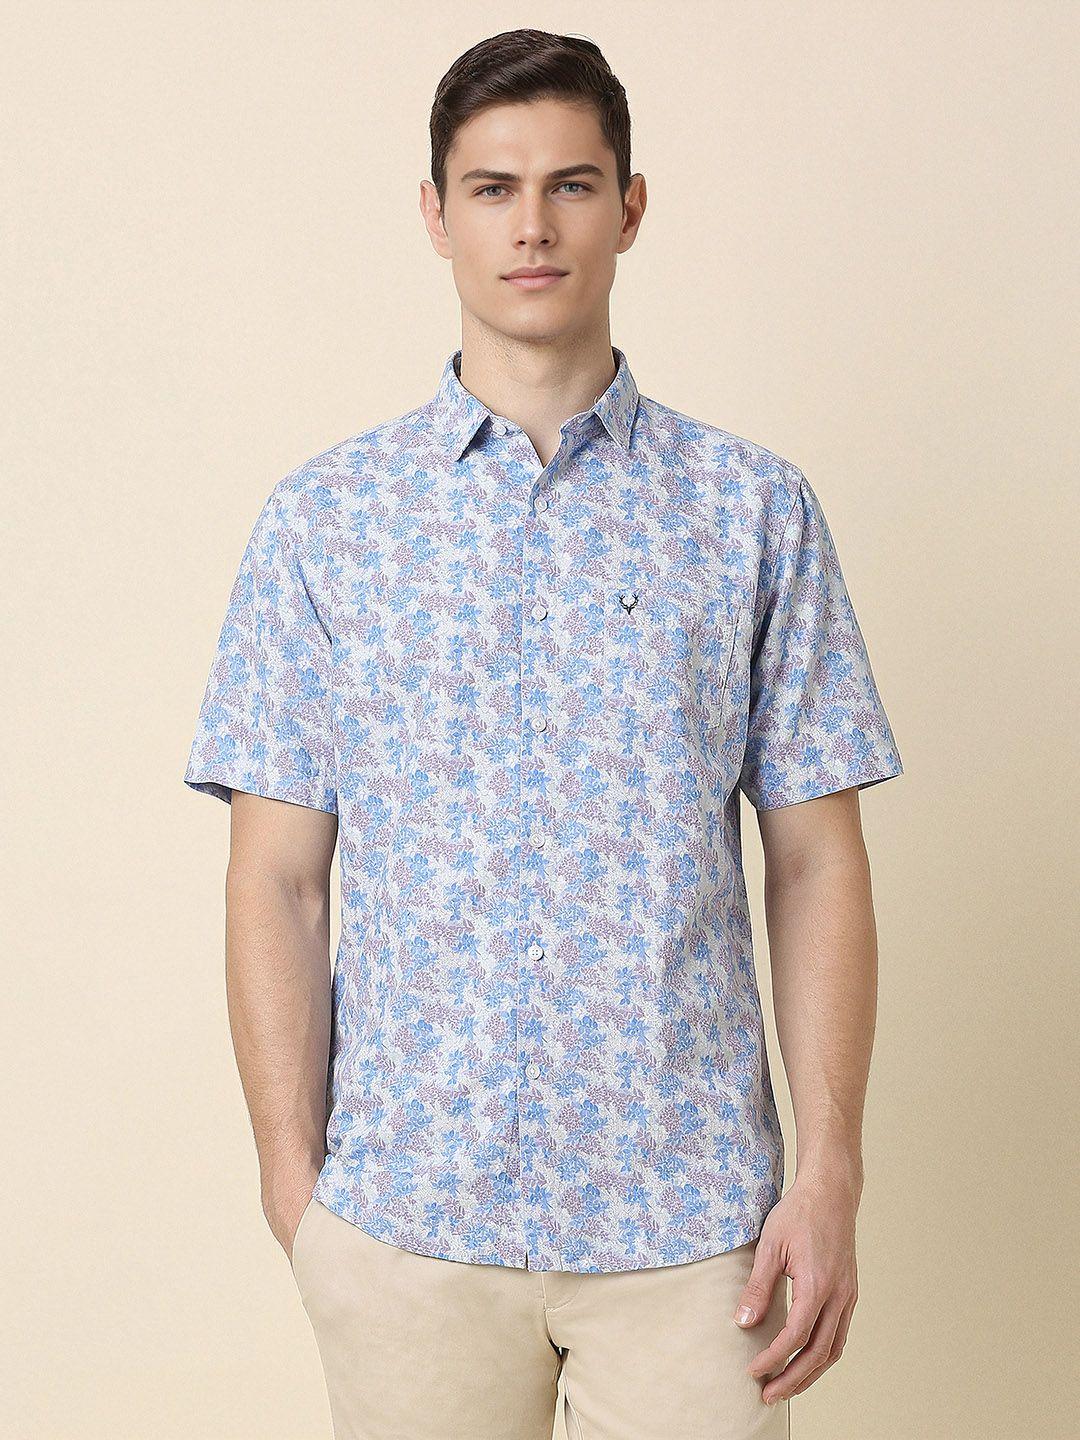 allen solly  slim fit floral printed half sleeves casual shirt